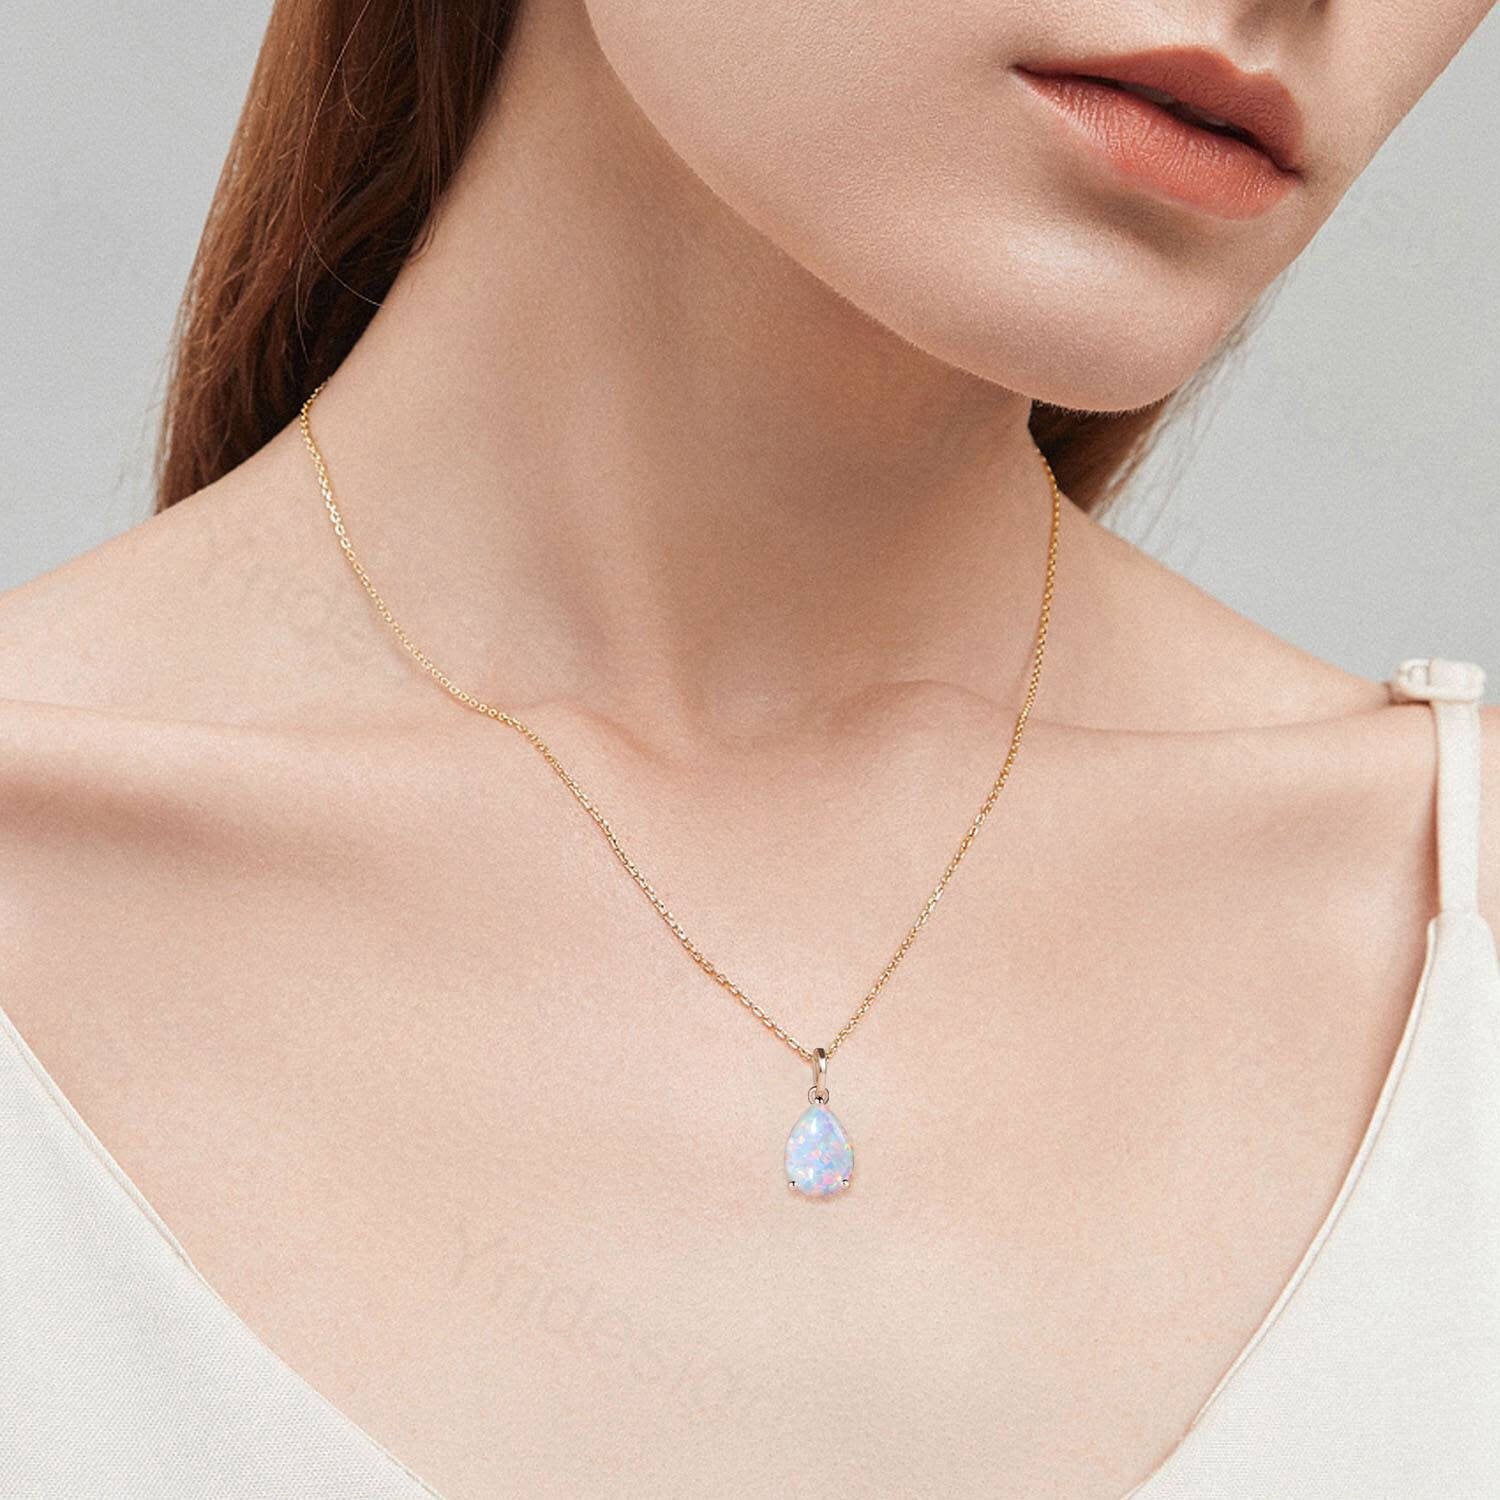 Dainty fire opal pendant necklace solitaire white opal pendant 14k/18k rose gold minimalist October birthstone pendant necklace for women - PENFINE